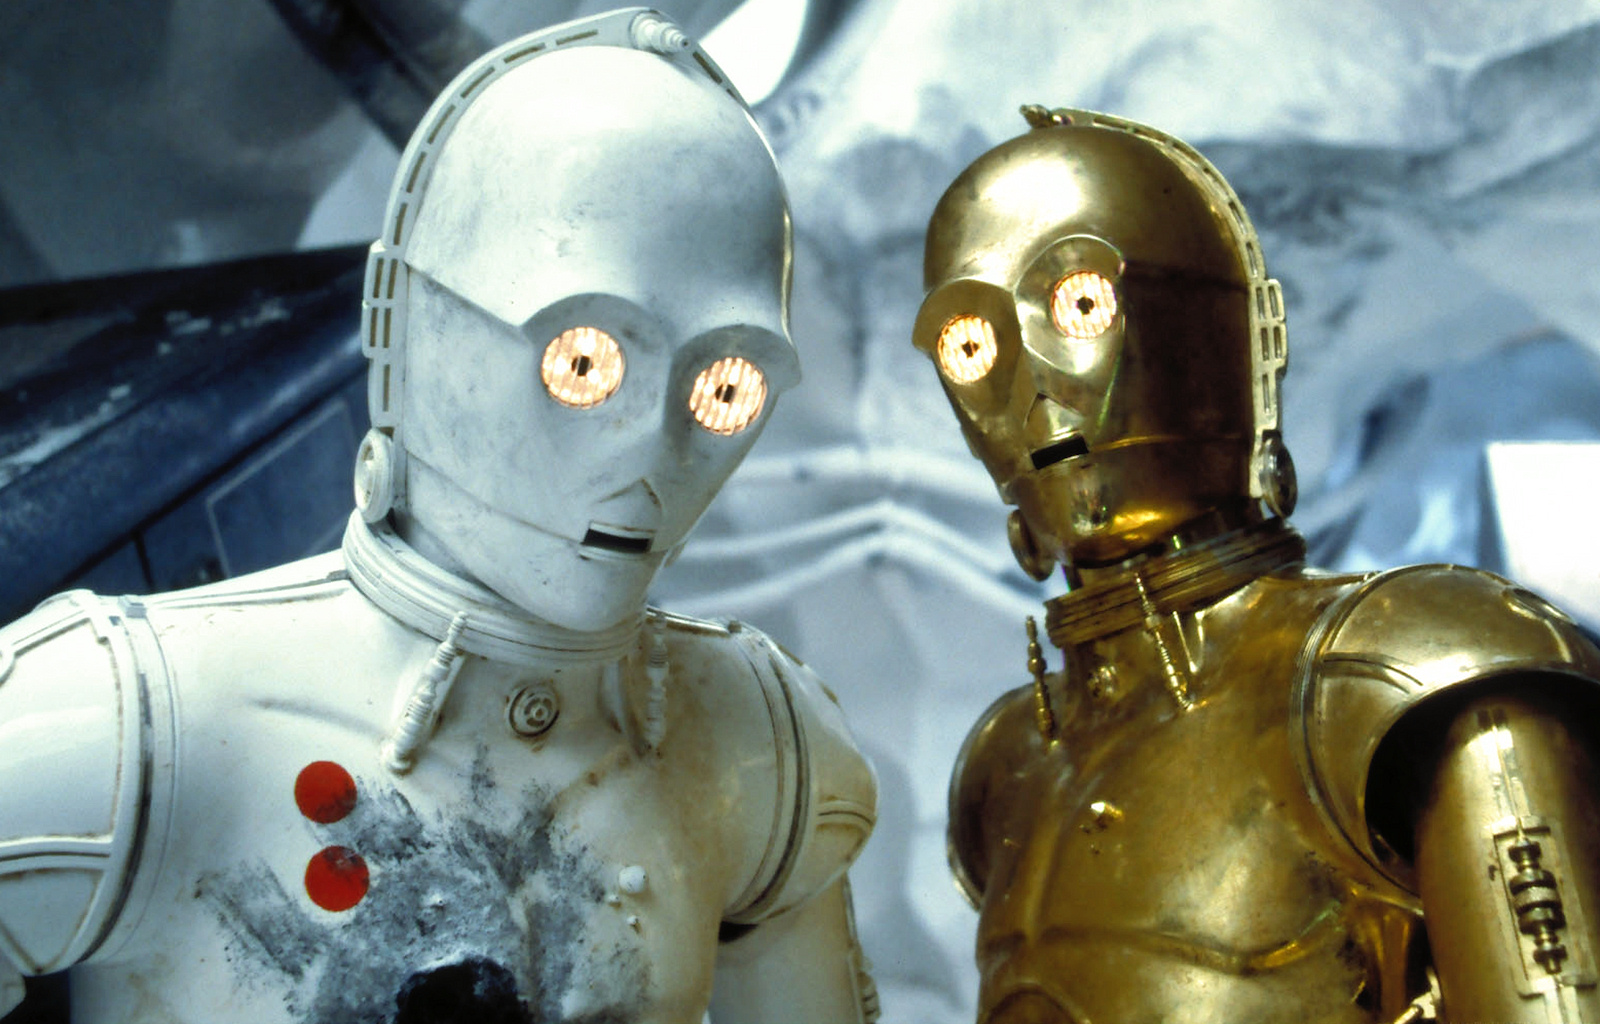 3PO-series protocol droid.